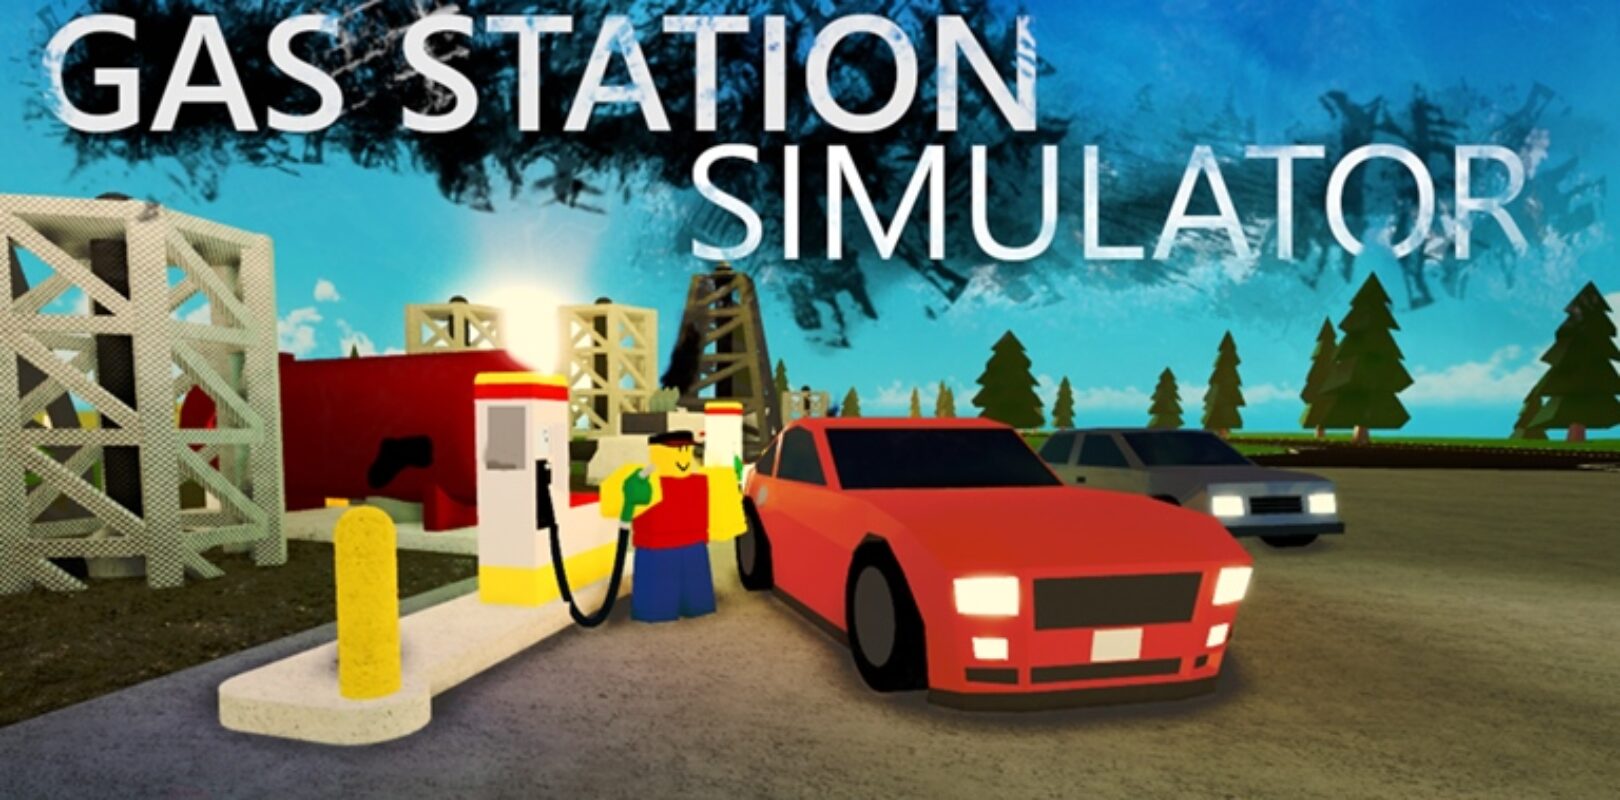 Gas Station Simulator Codes 2020 Pivotal Gamers - despacito 21 roblox code